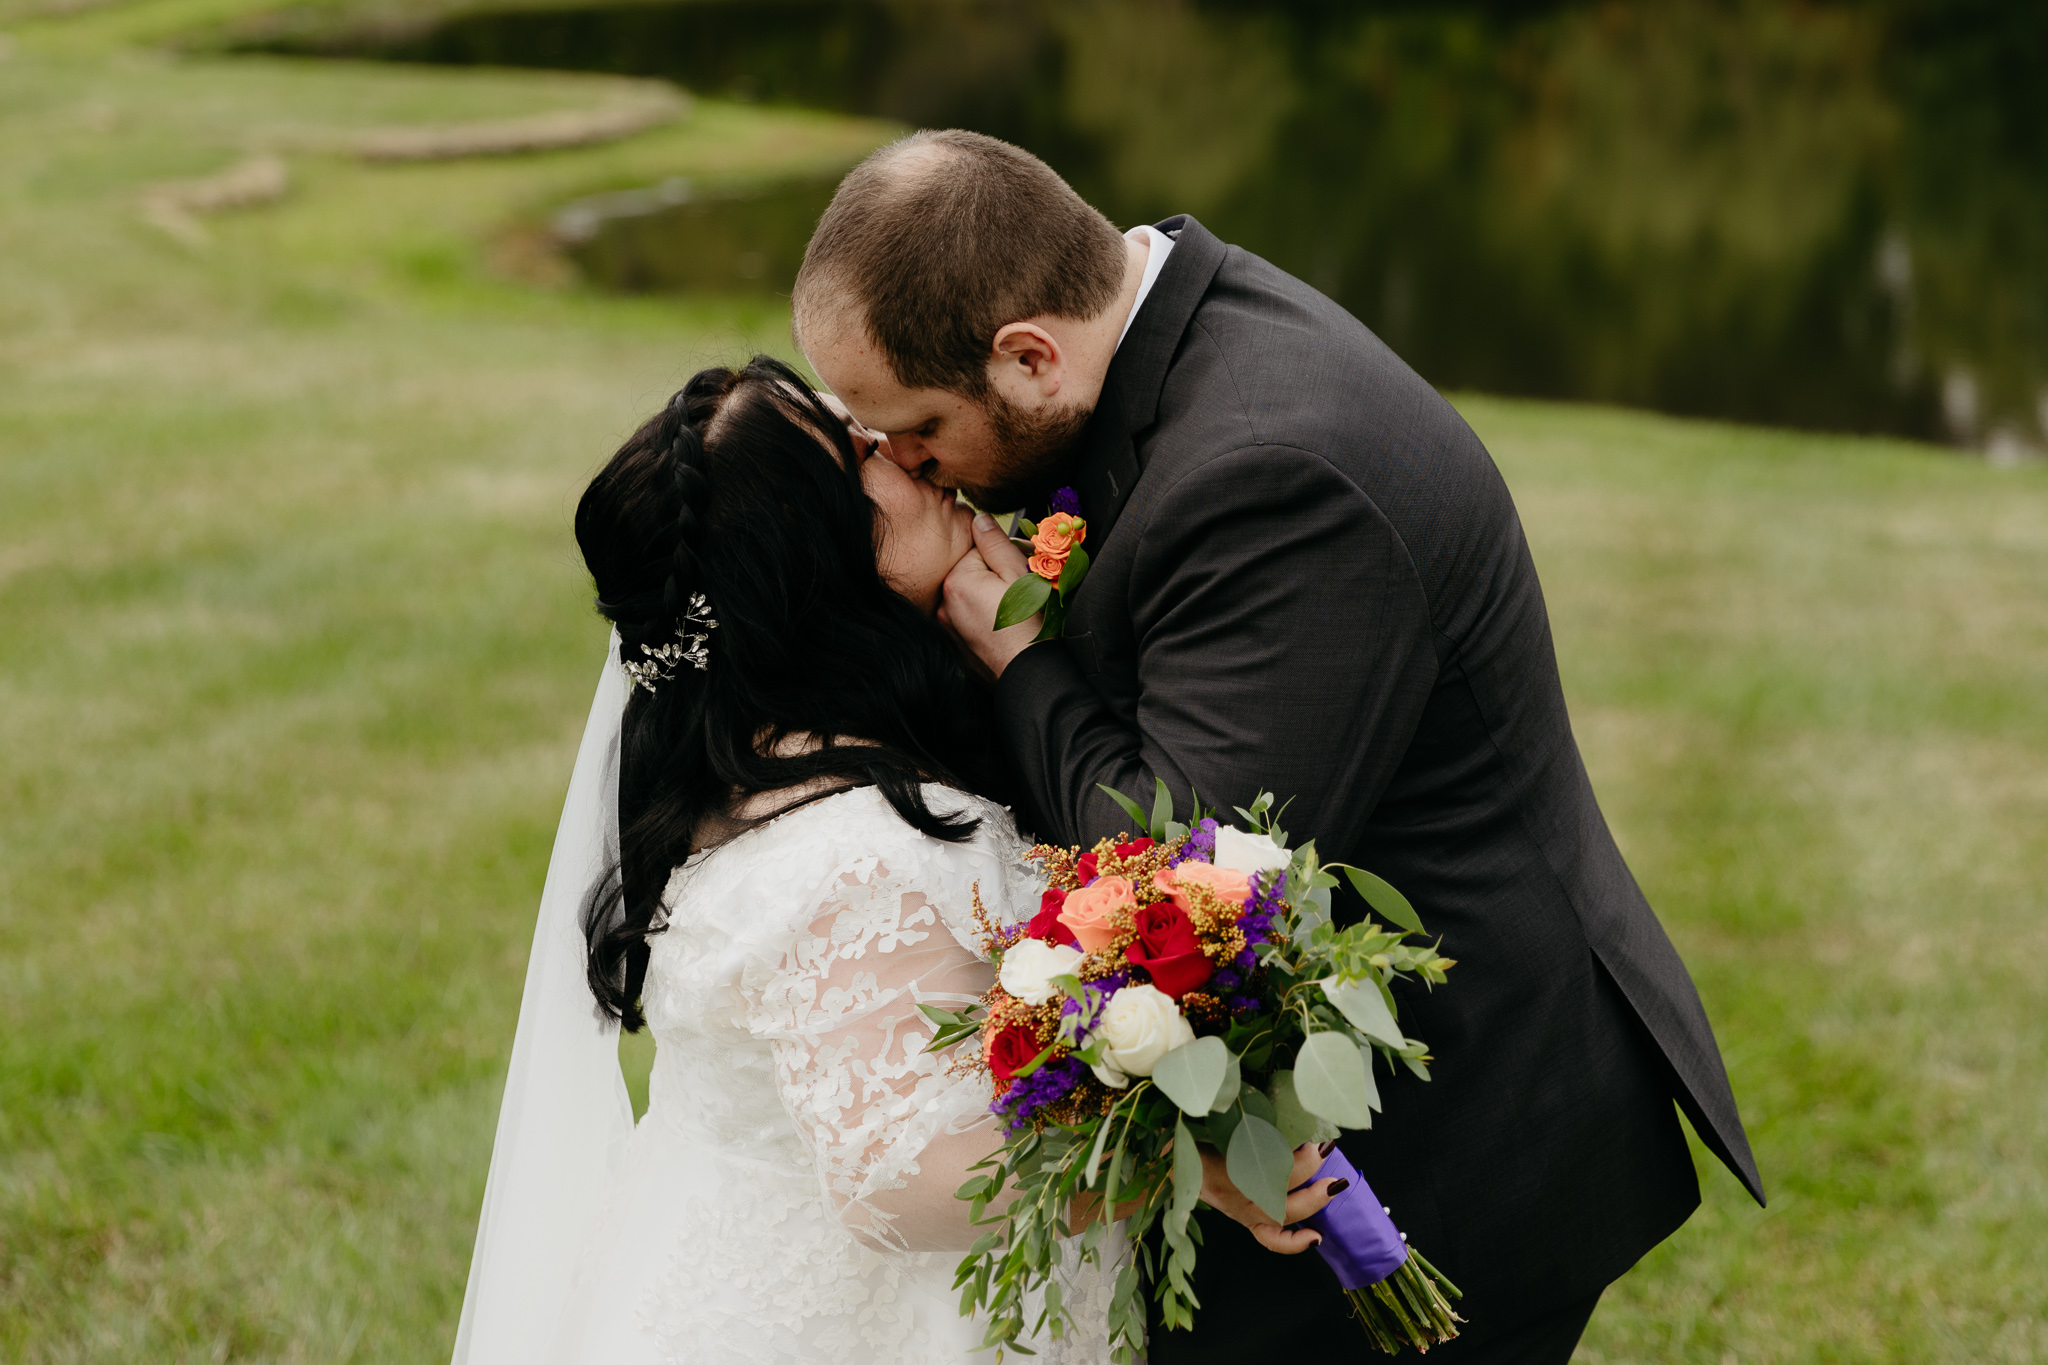 Fort Wayne Backyard Wedding in Indiana || Outdoor Couple Photos